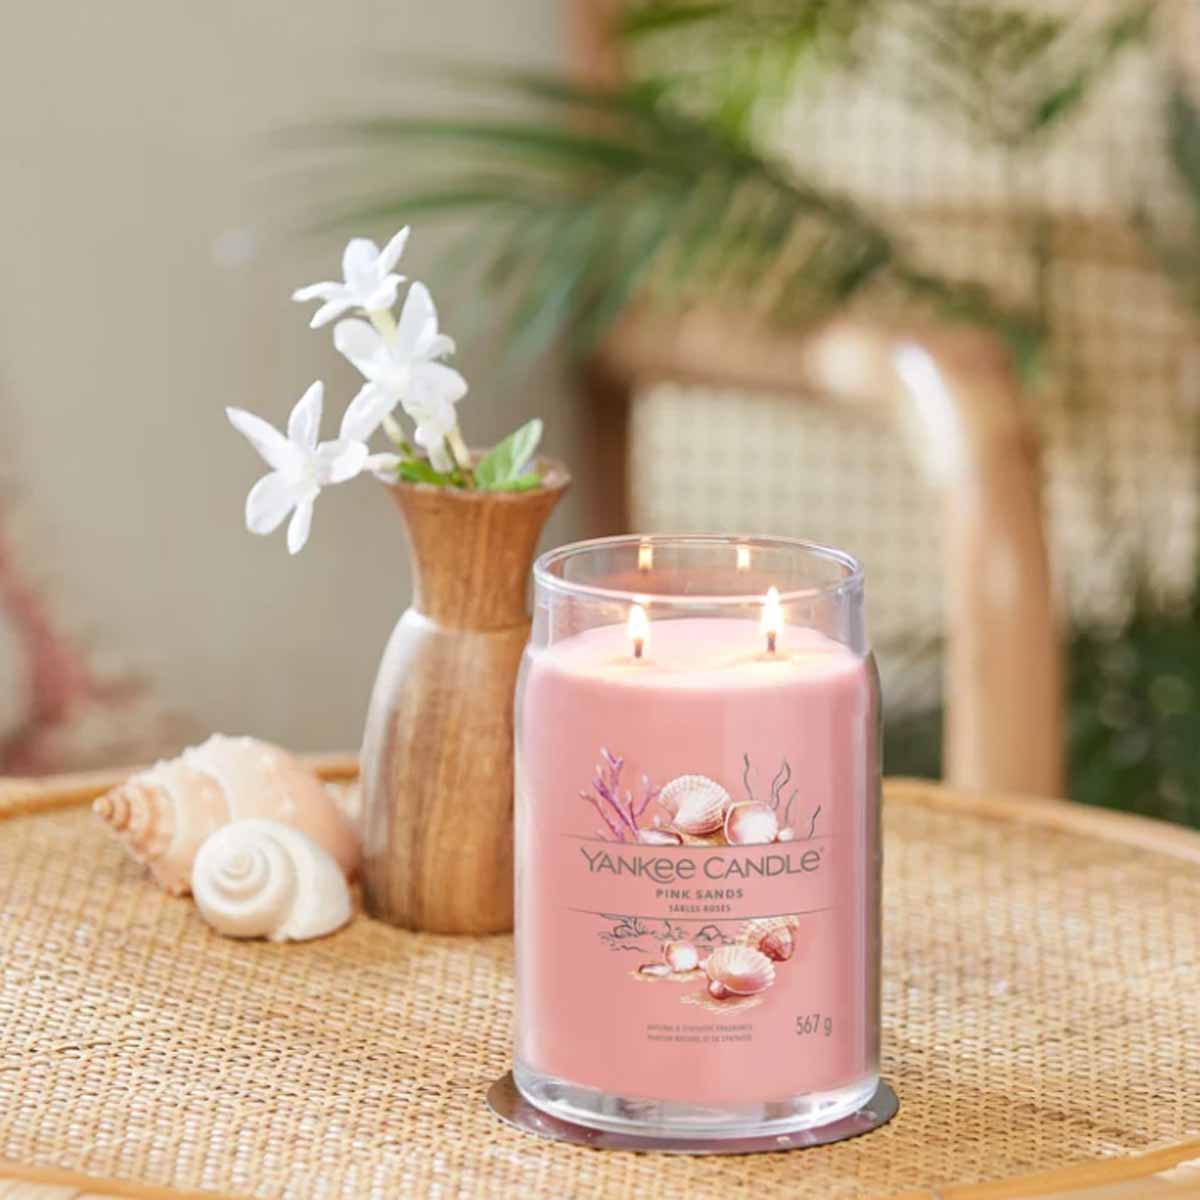 Yankee candle offerte candele profumate in giara Pink Sands 1629962E